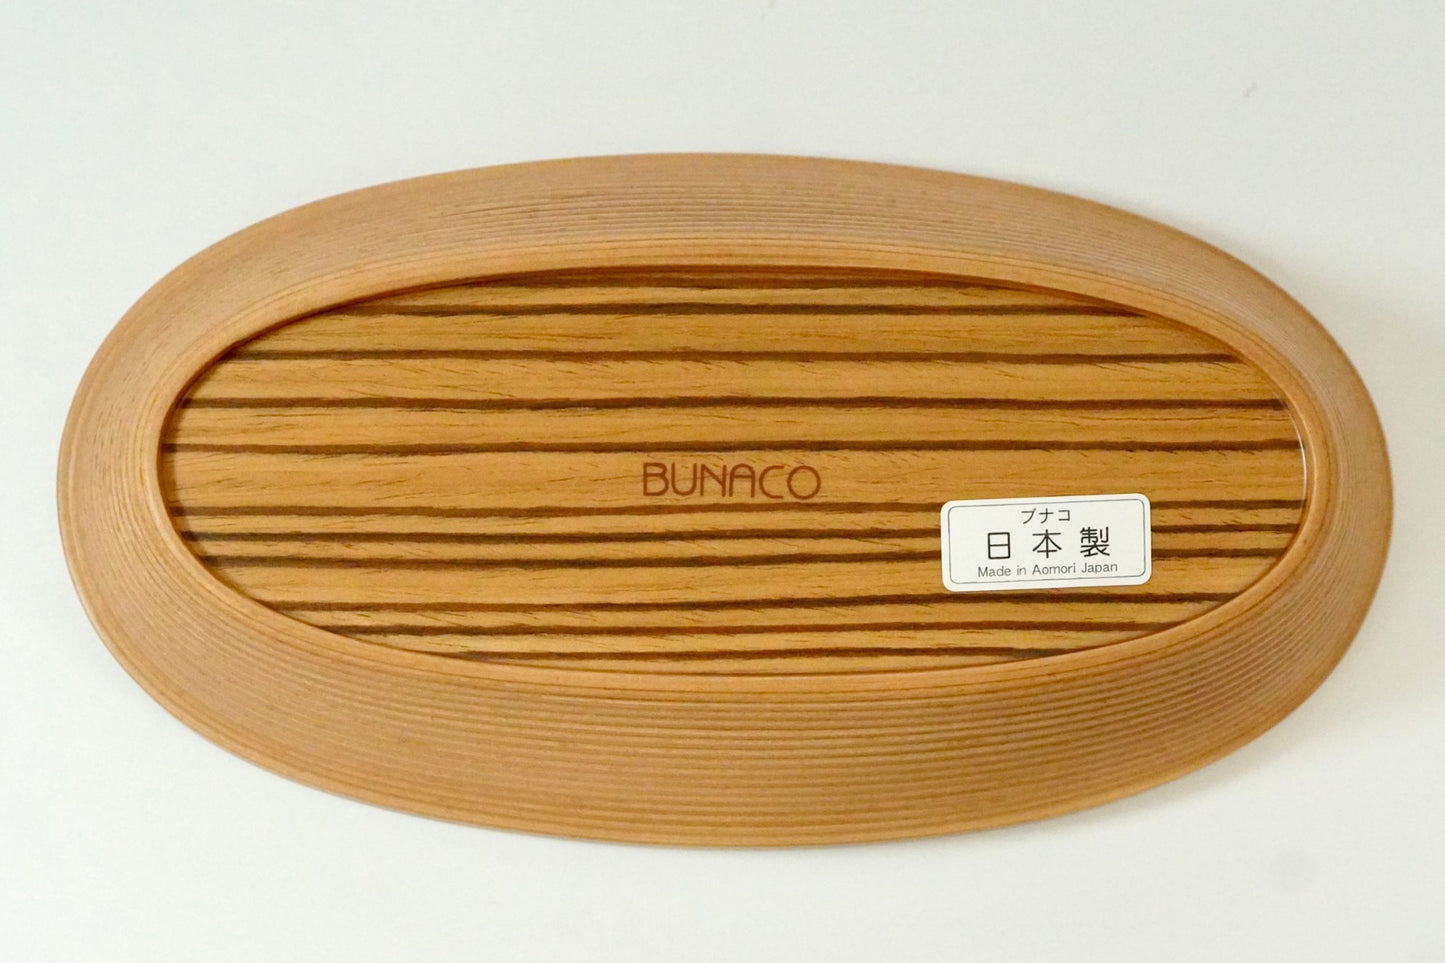 BUNACO Cosmetic Box oval S